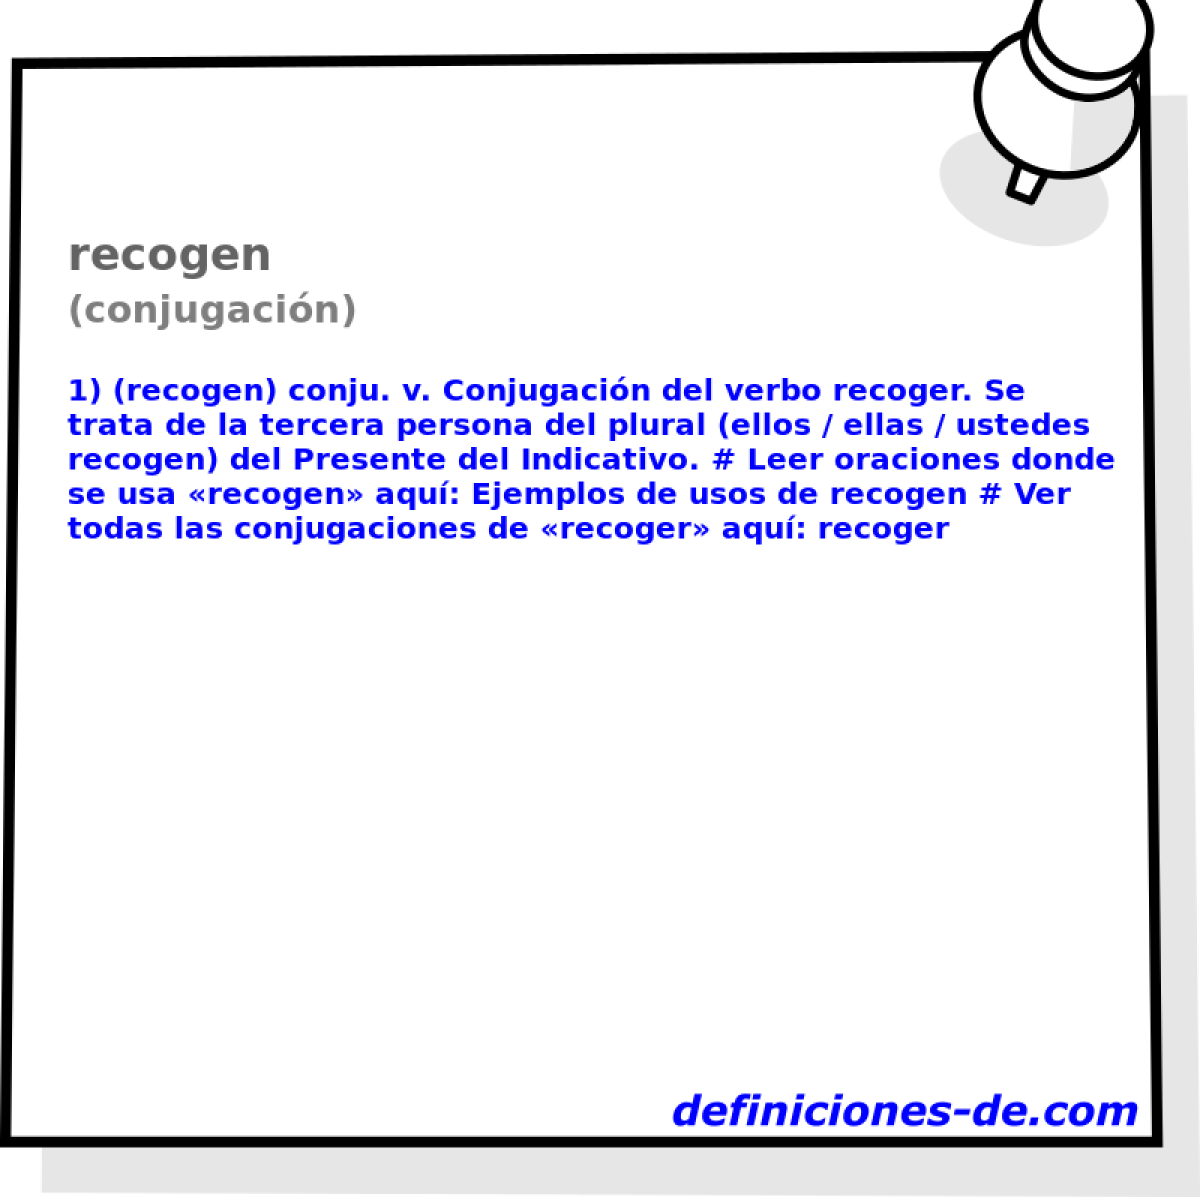 recogen (conjugacin)